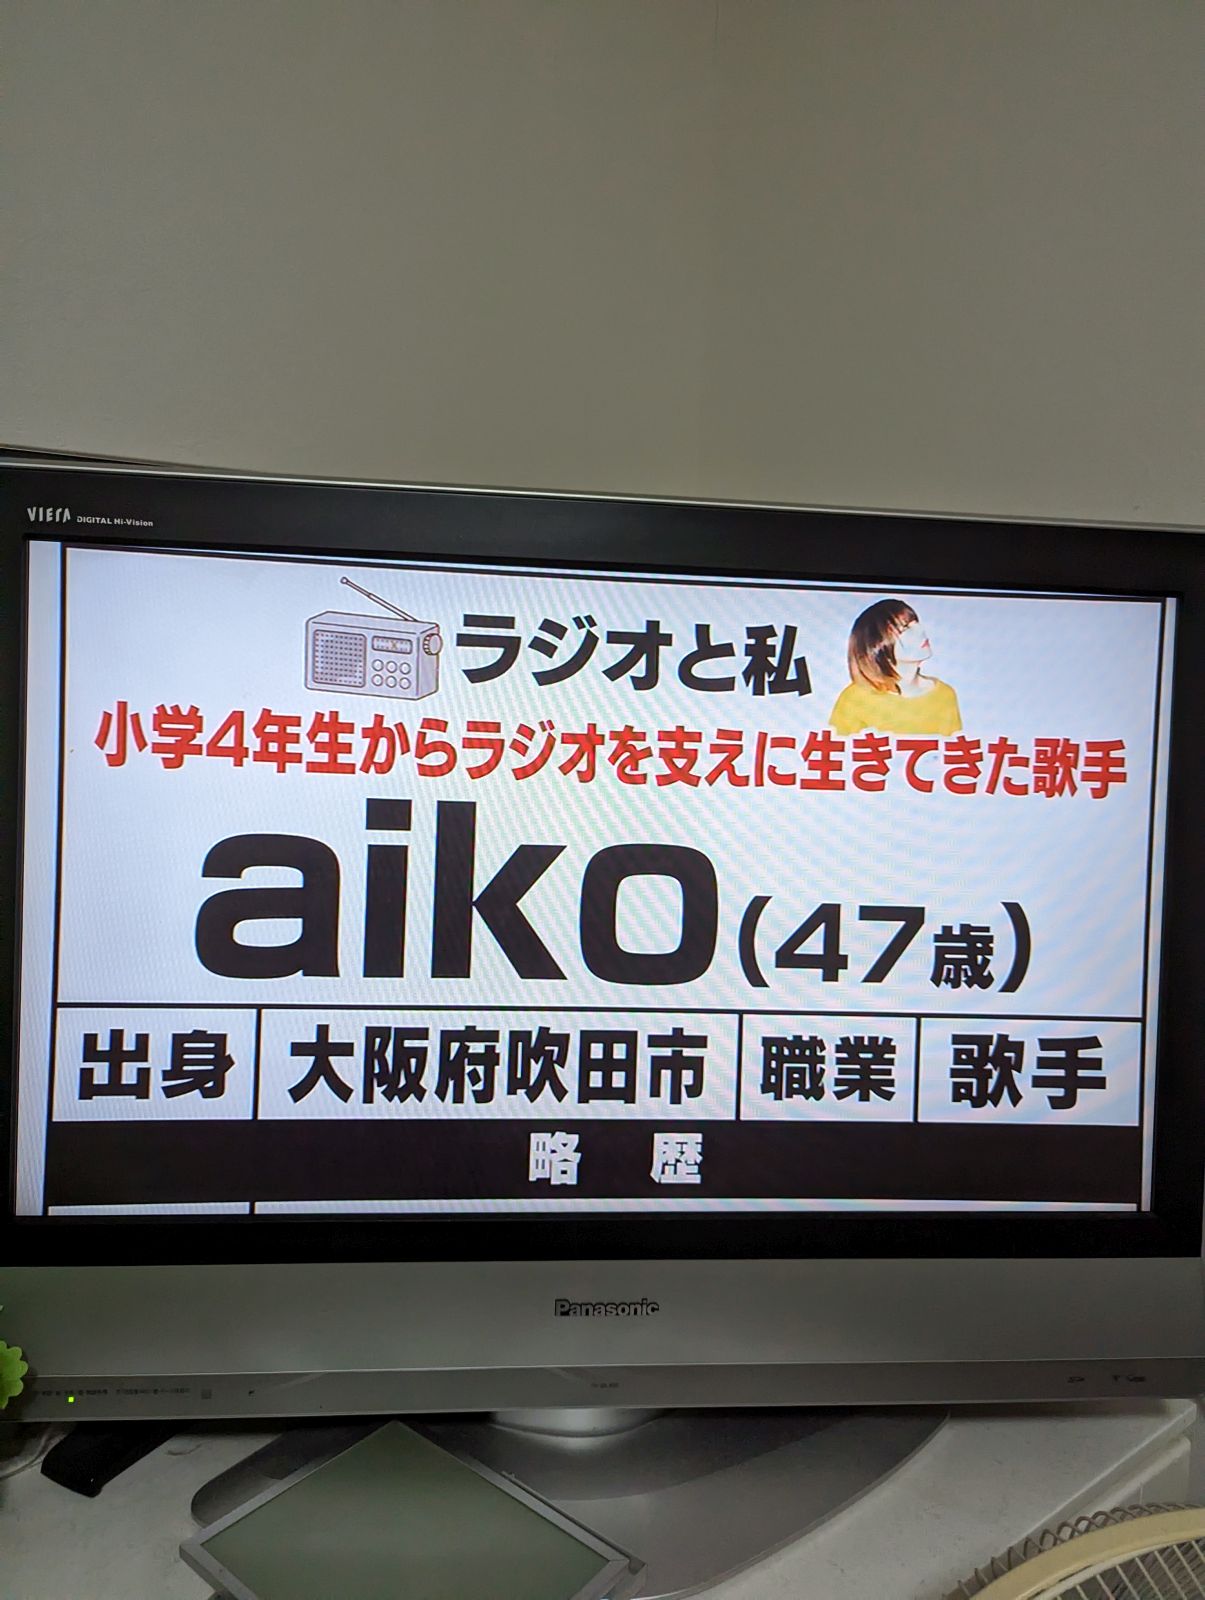 aiko(47歳)